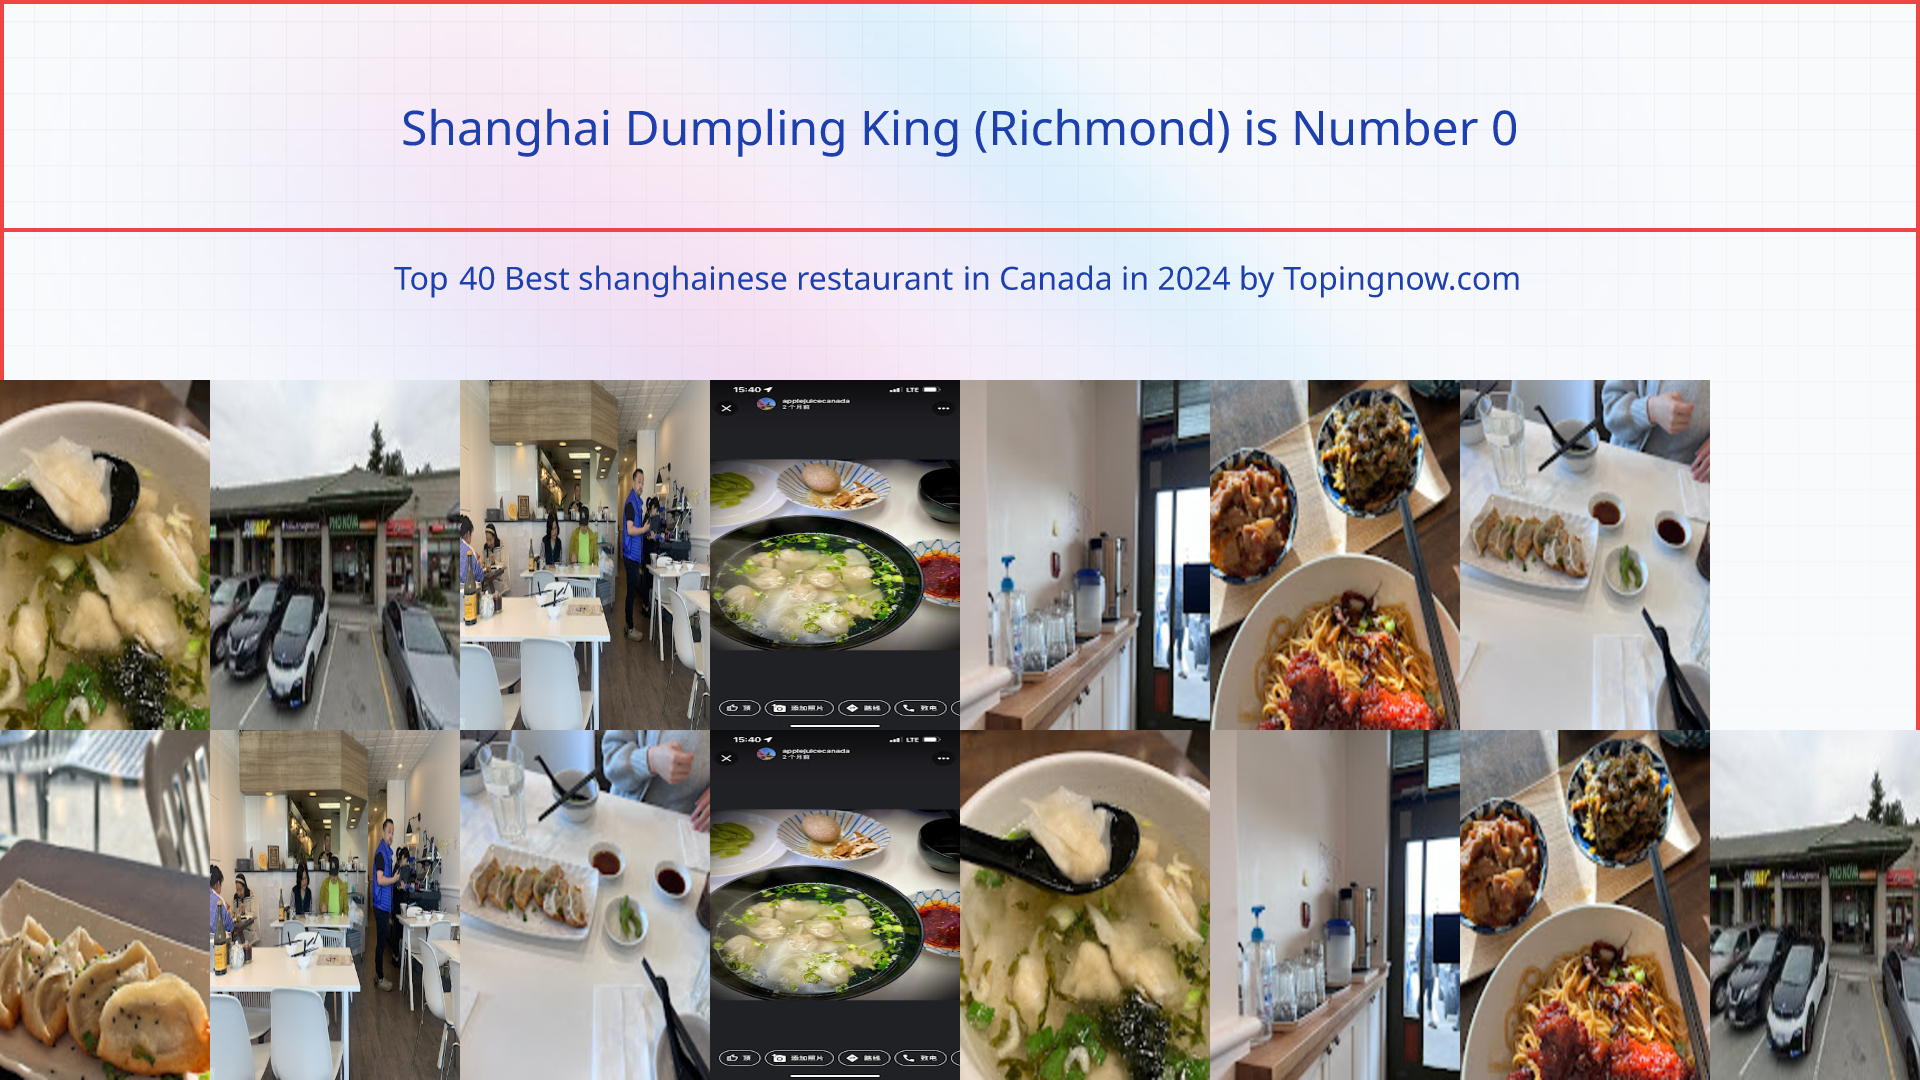 Shanghai Dumpling King (Richmond): Top 40 Best shanghainese restaurant in Canada in 2024